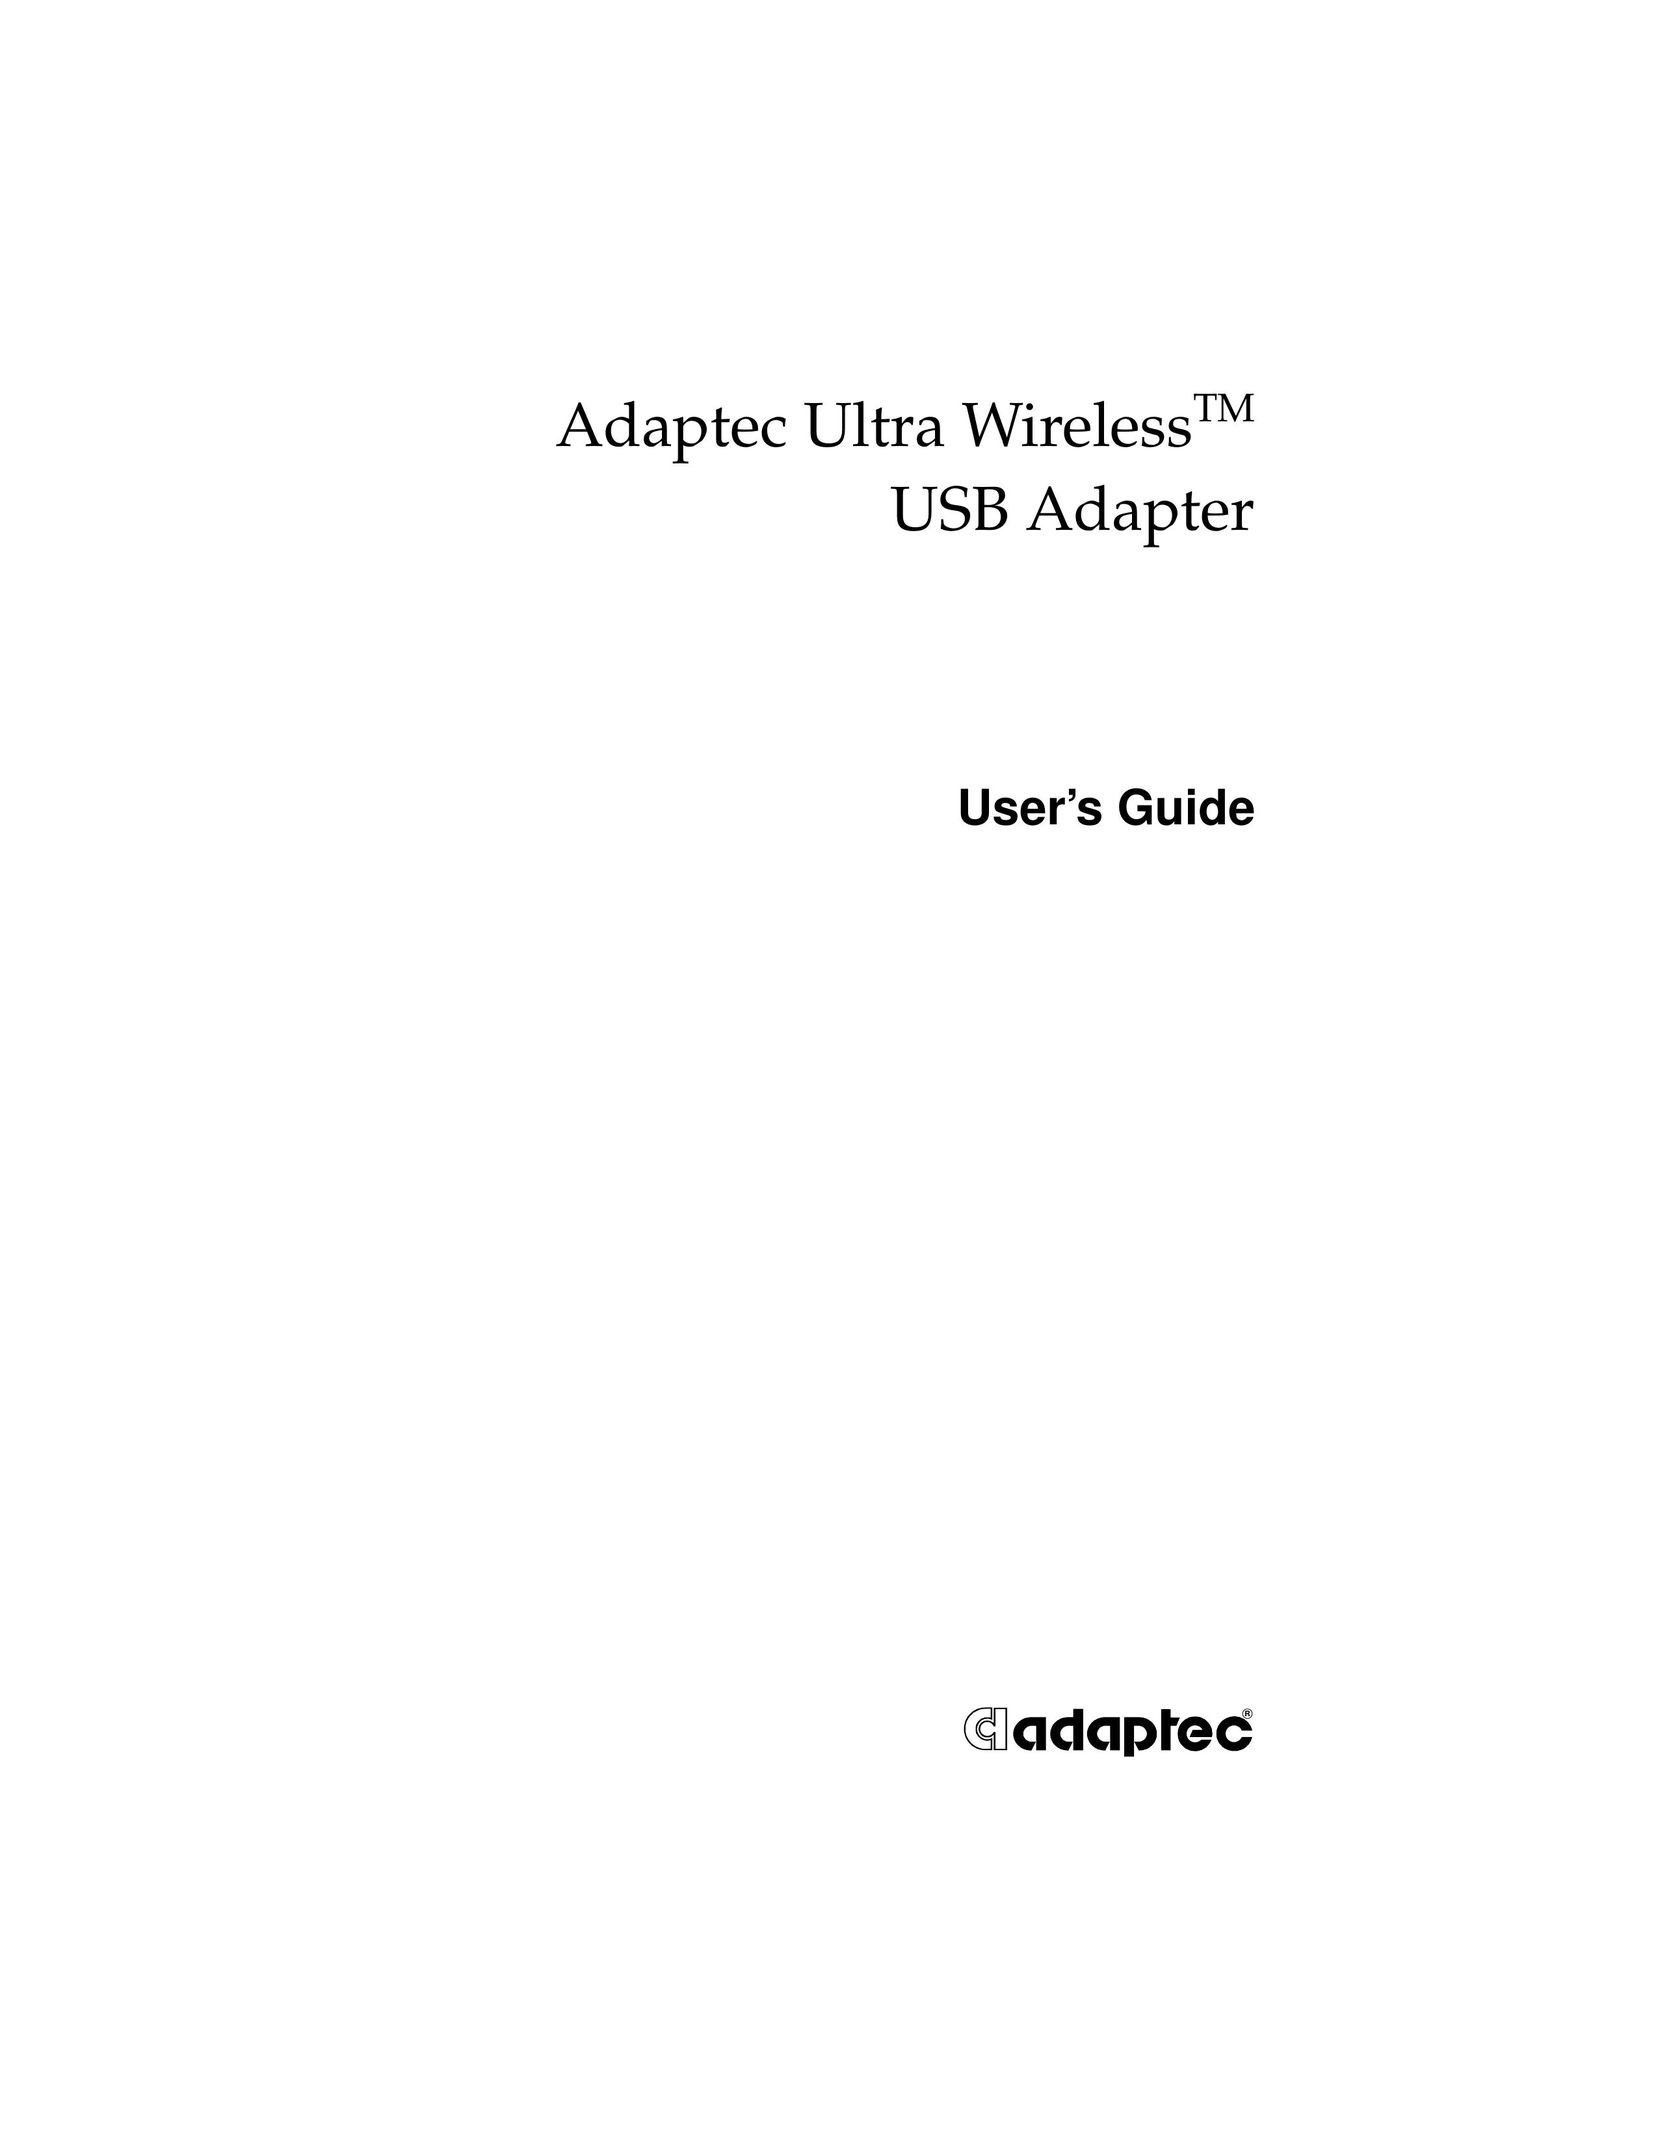 Adaptec WirelessTM USB Adapter Network Card User Manual